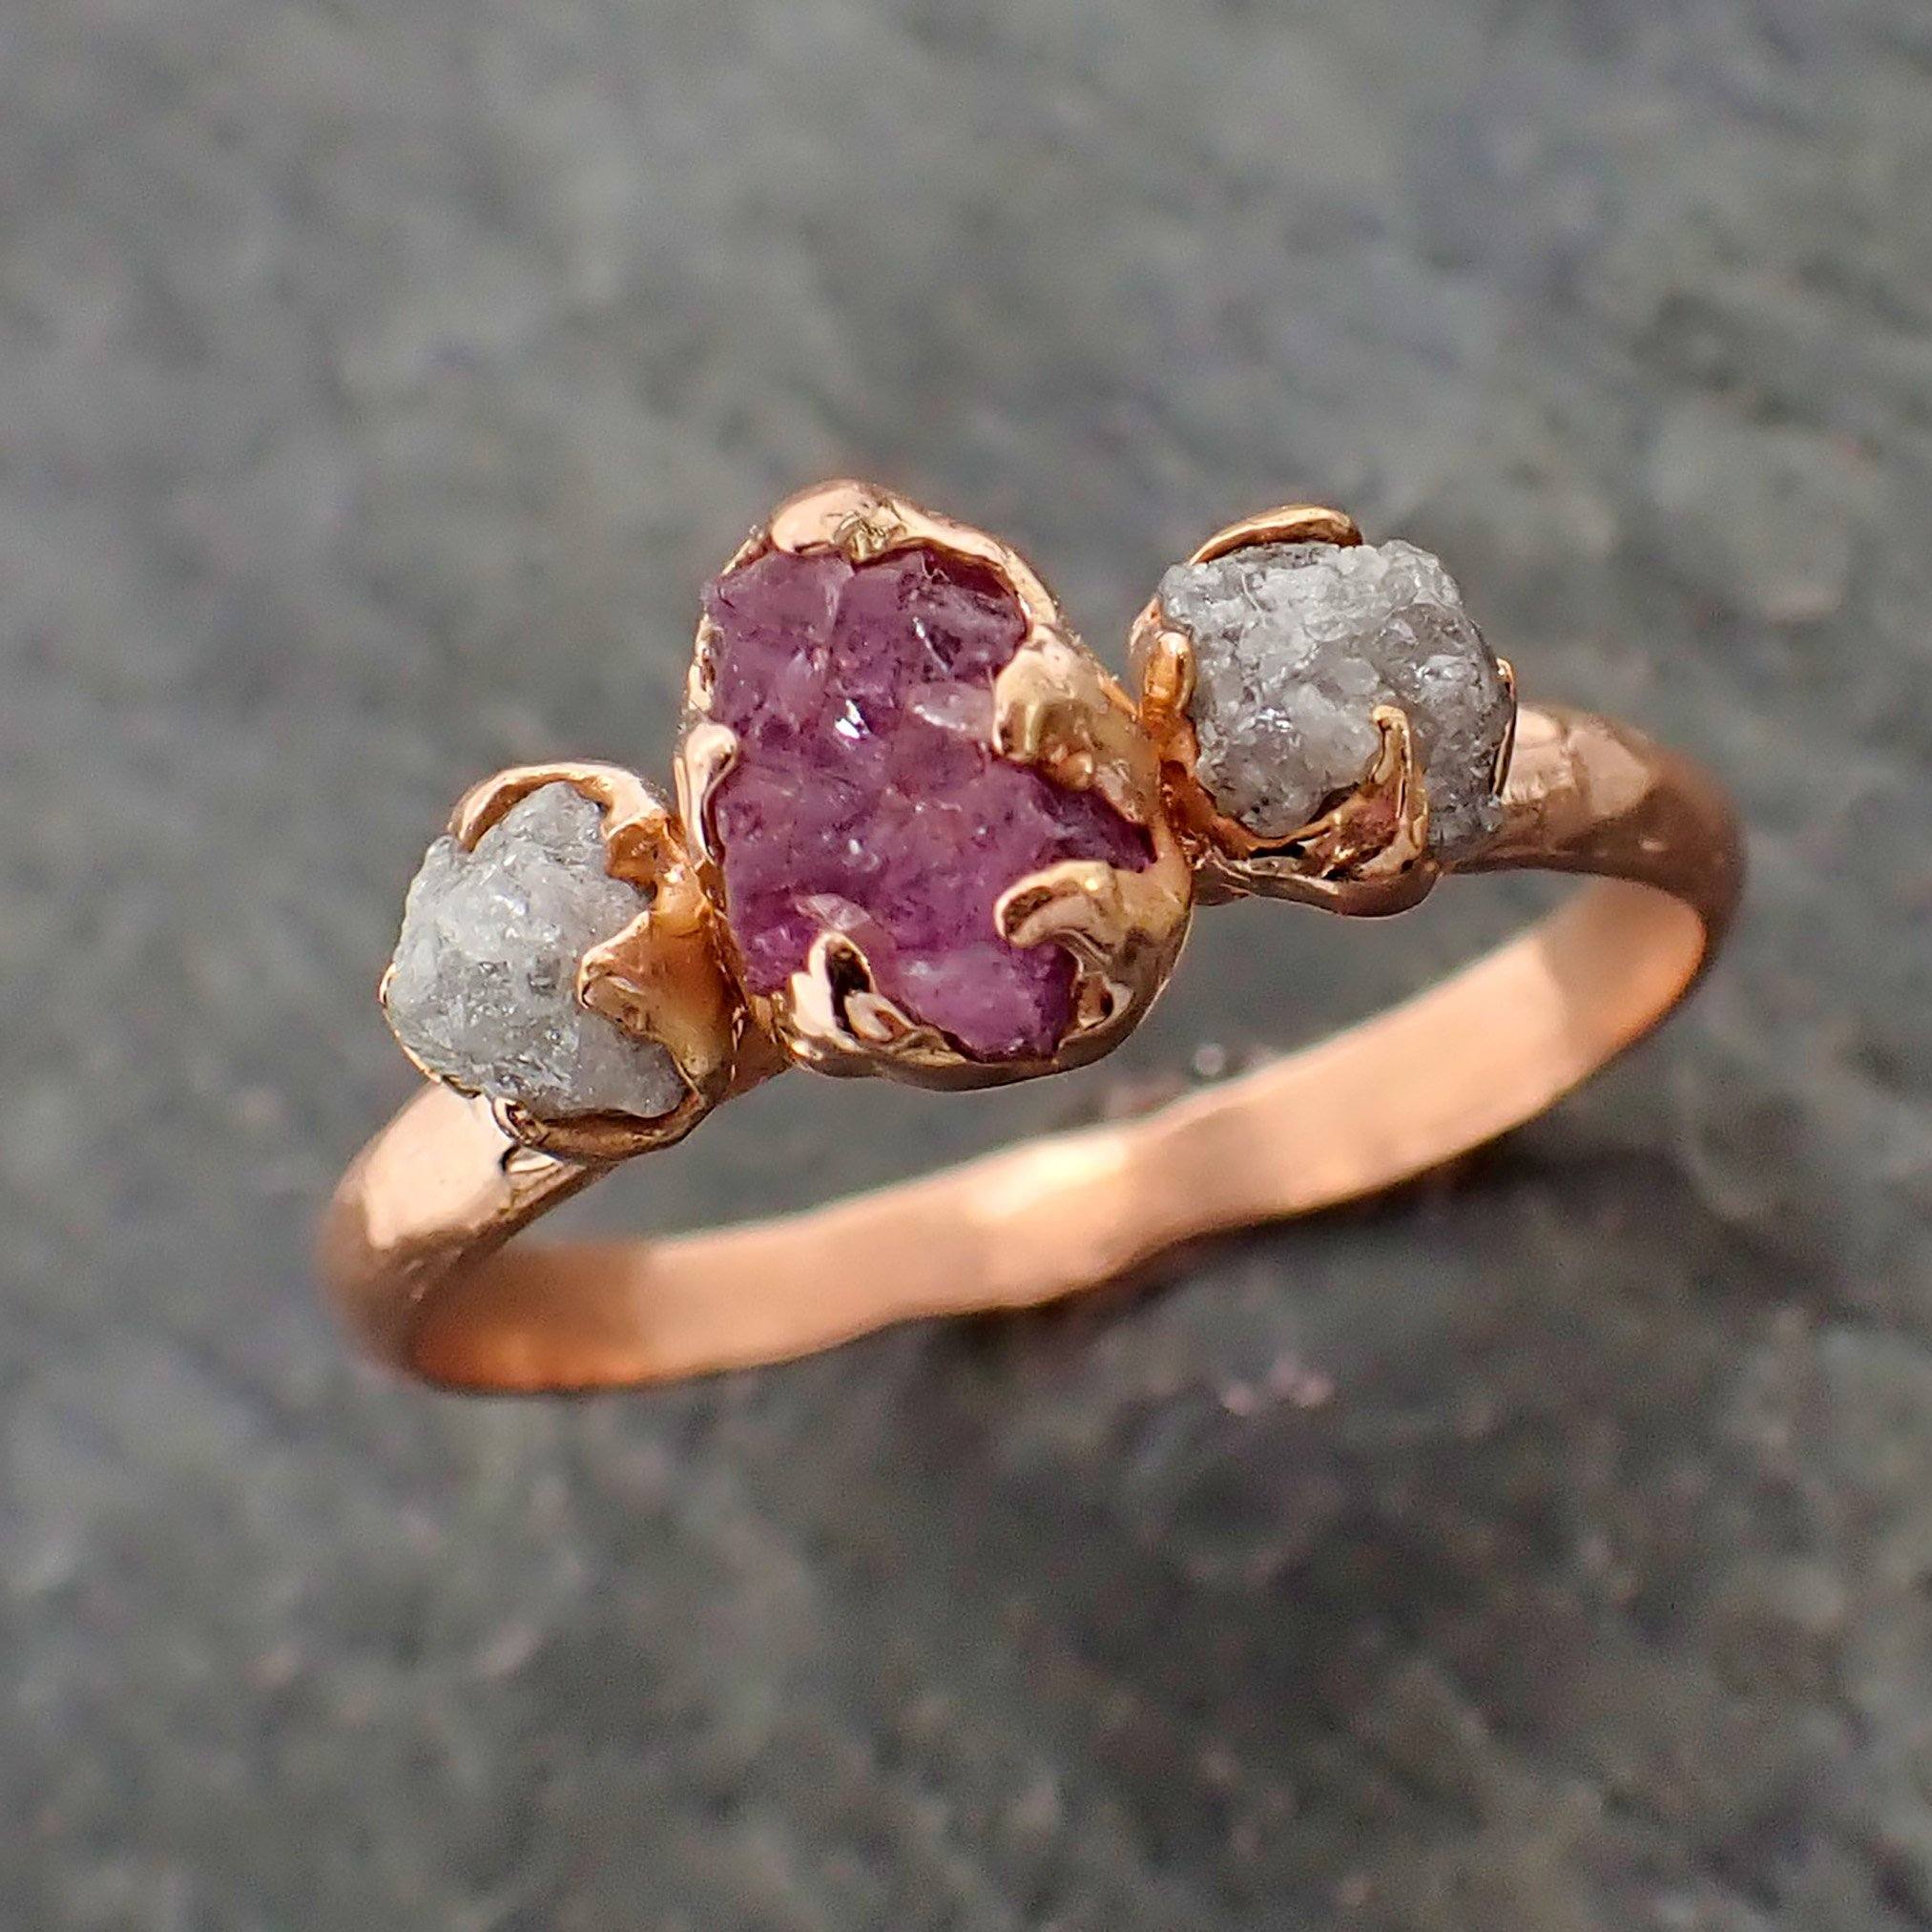 raw sapphire engagement ring pink wedding ring custom multi stone rose gold gemstone ring byangeline 2176 Alternative Engagement